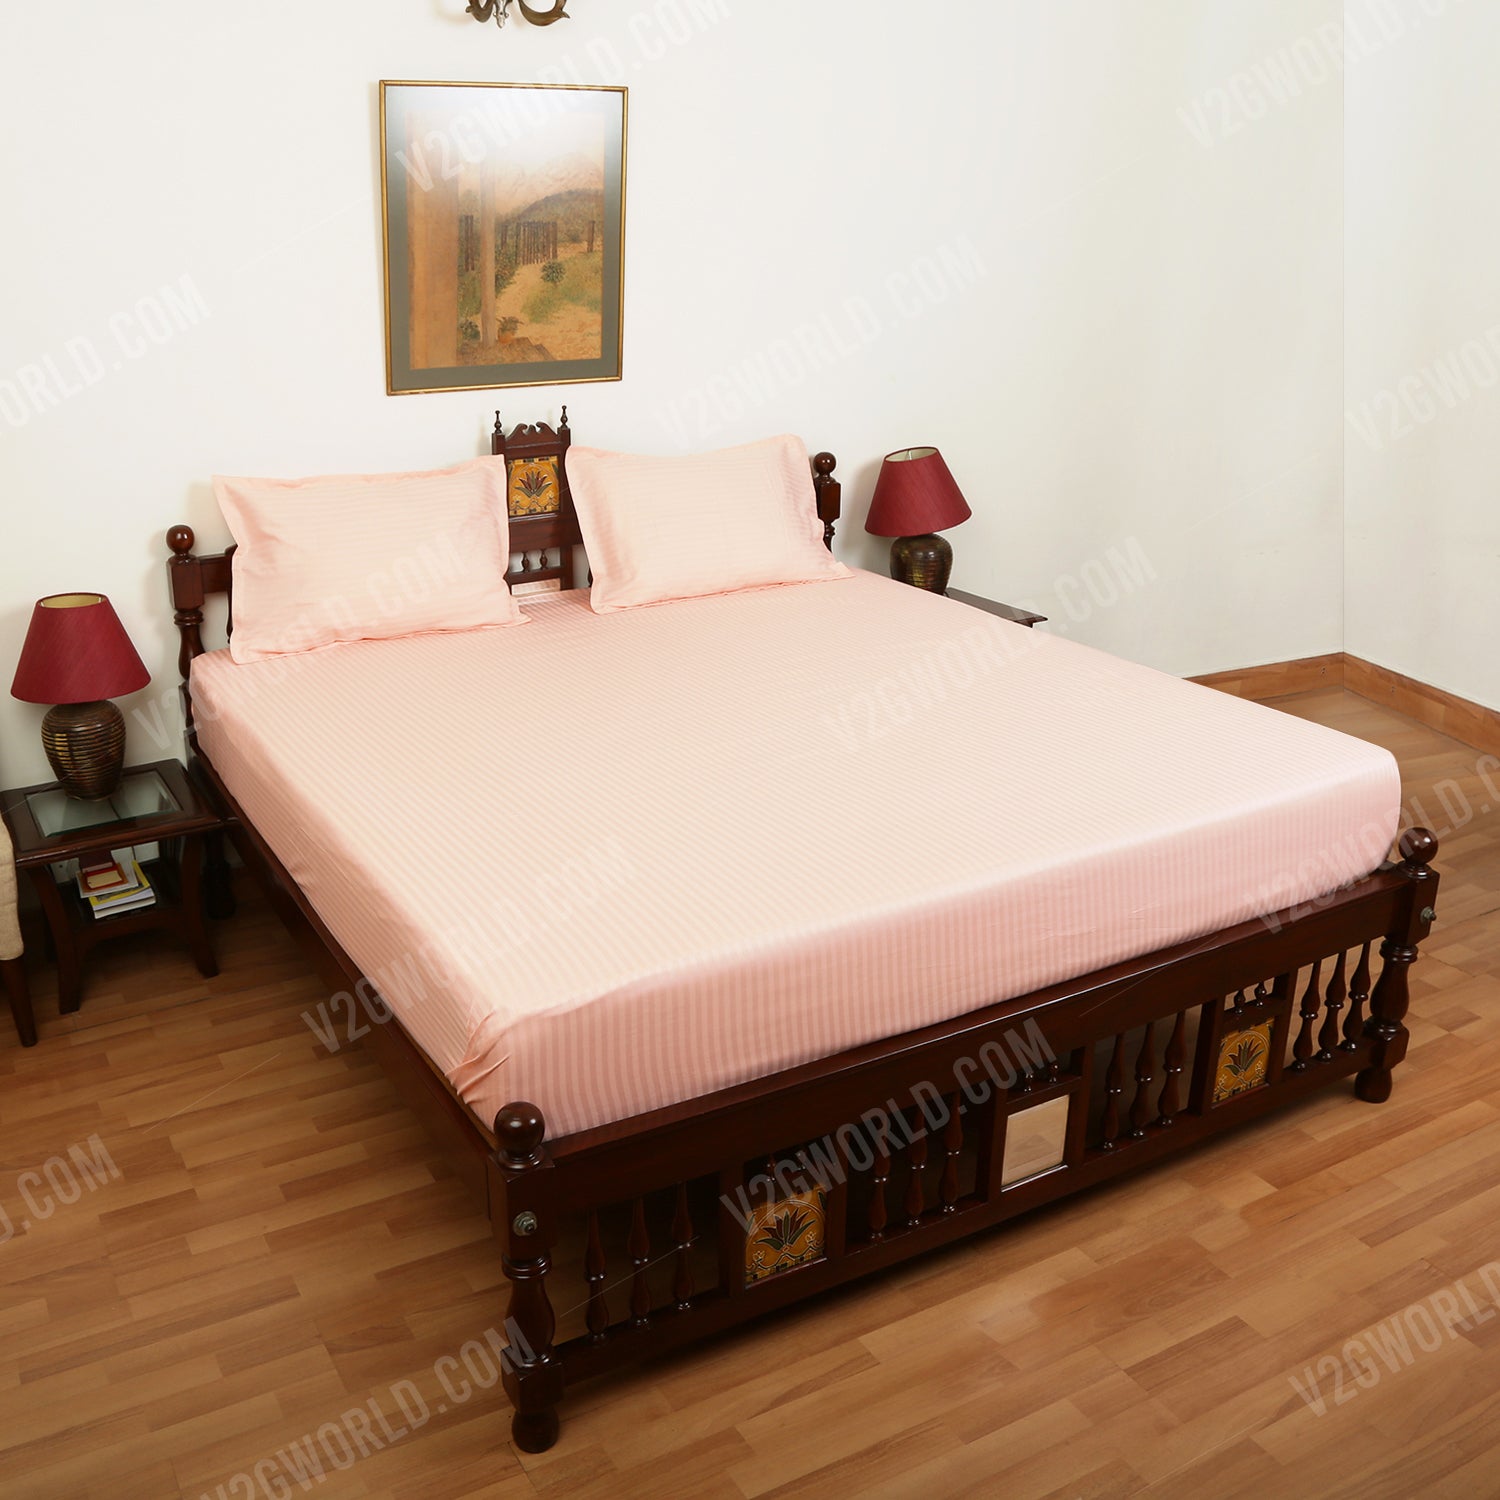 Plain Bedsheet - Double Bed - Peach